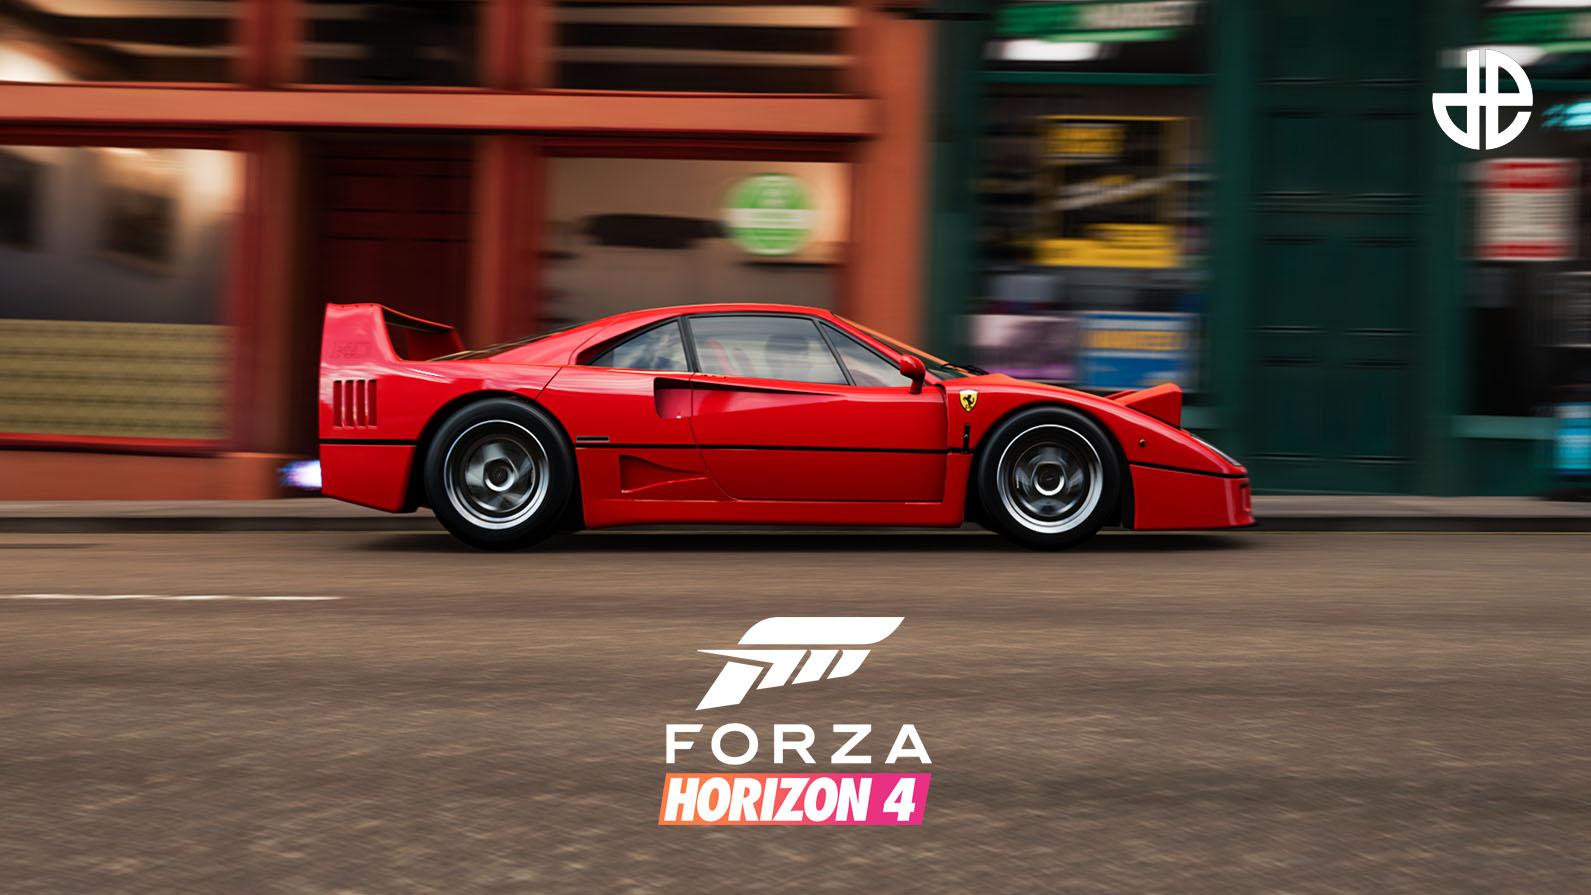 Forza Horizon 6 setting: Where will Horizon head next? - Dexerto